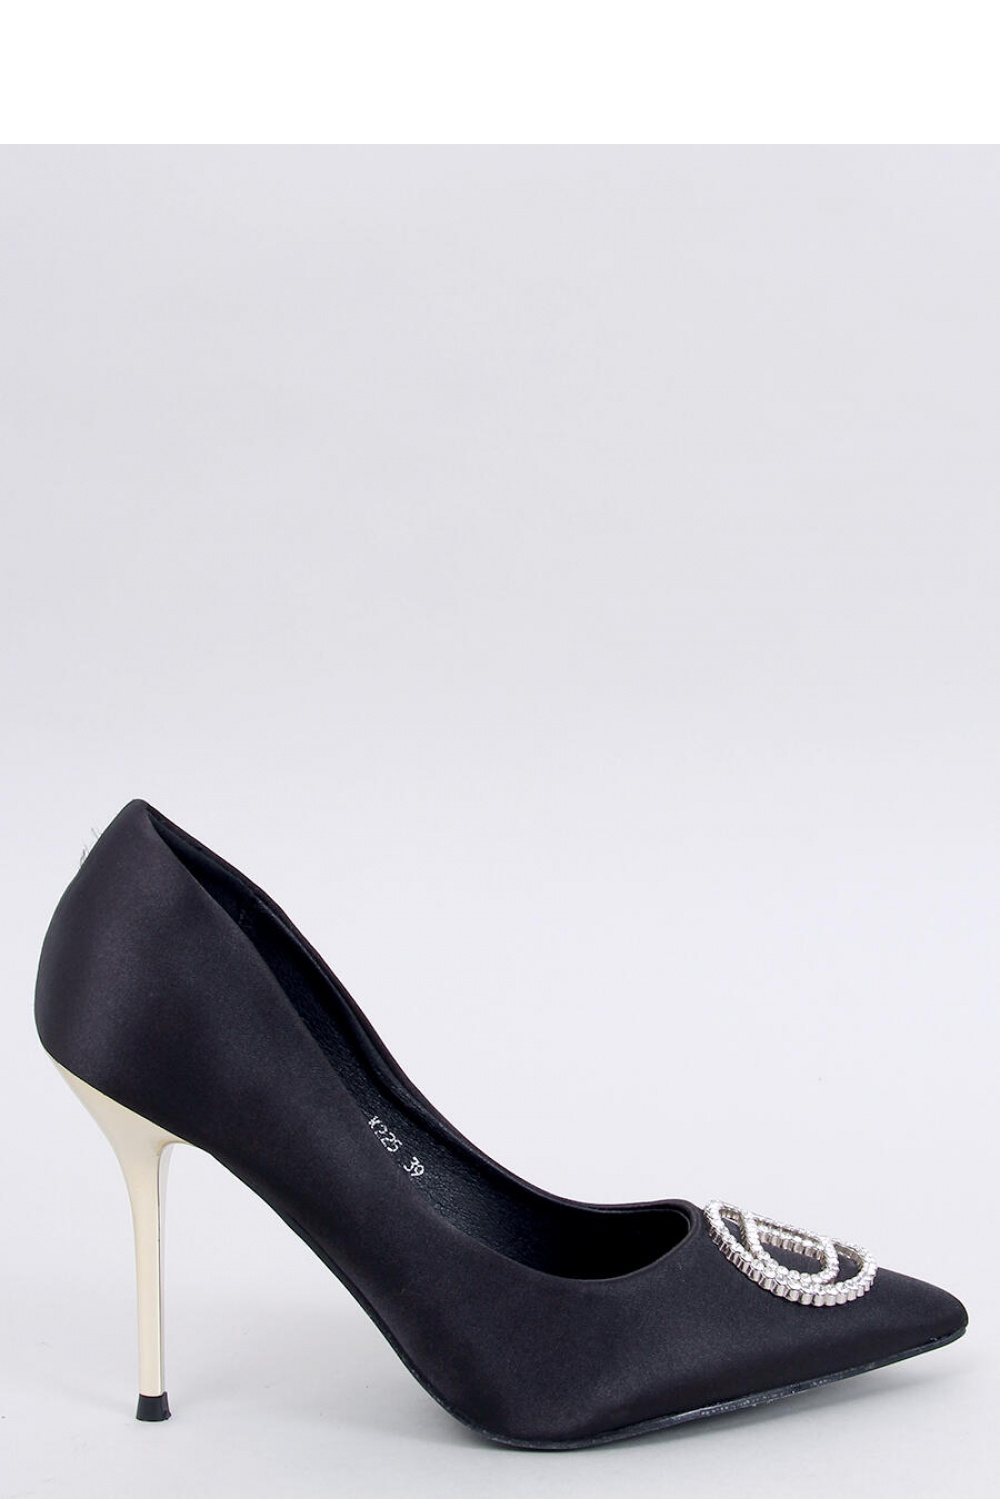 Strappy high heels model 19328..